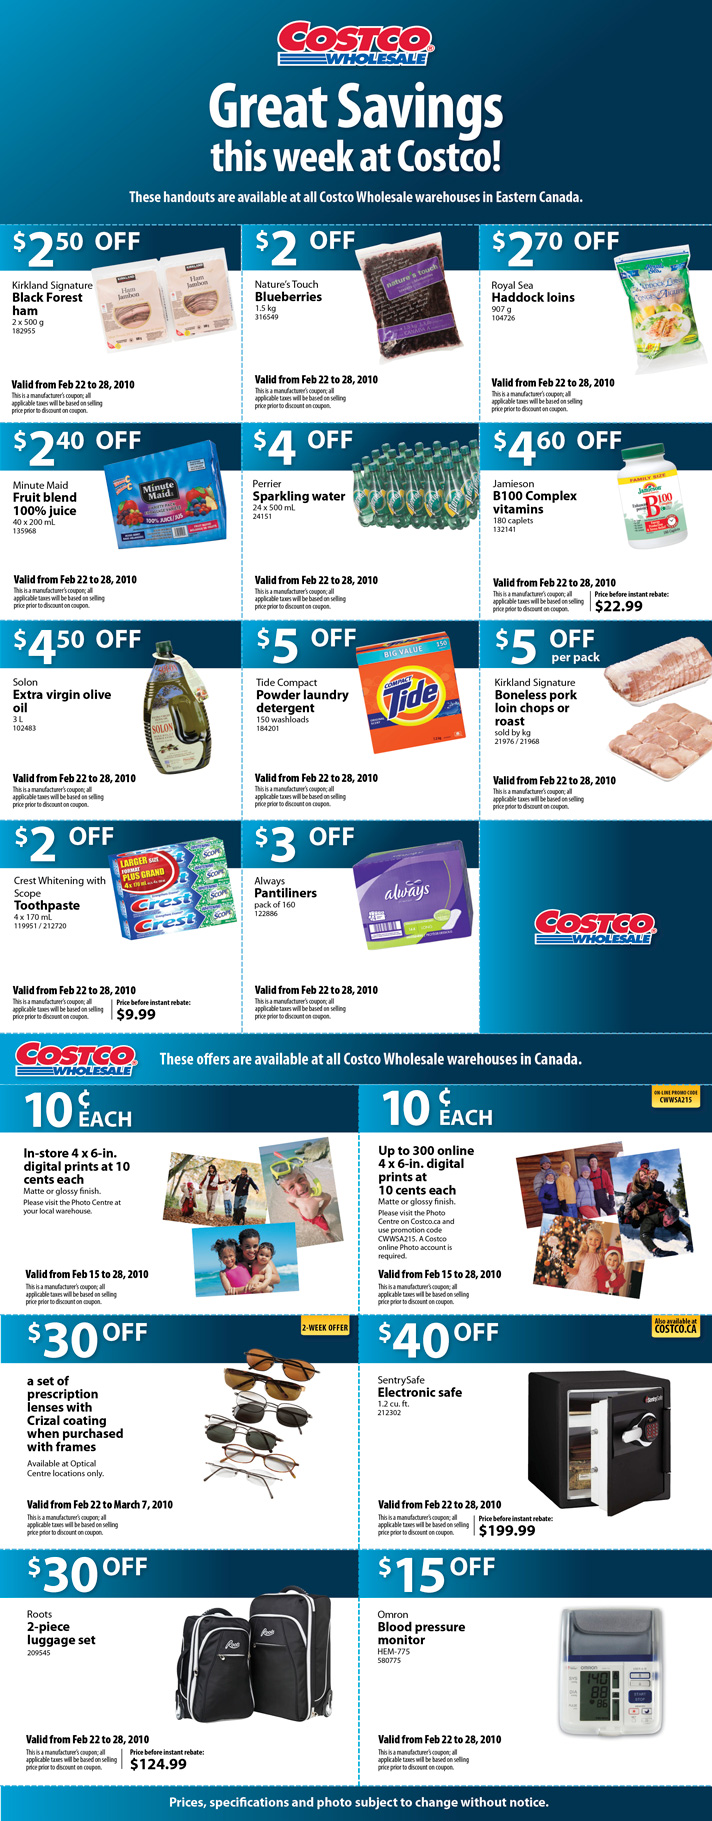 this-week-s-costco-instant-savings-coupons-feb-22-feb-28-2010